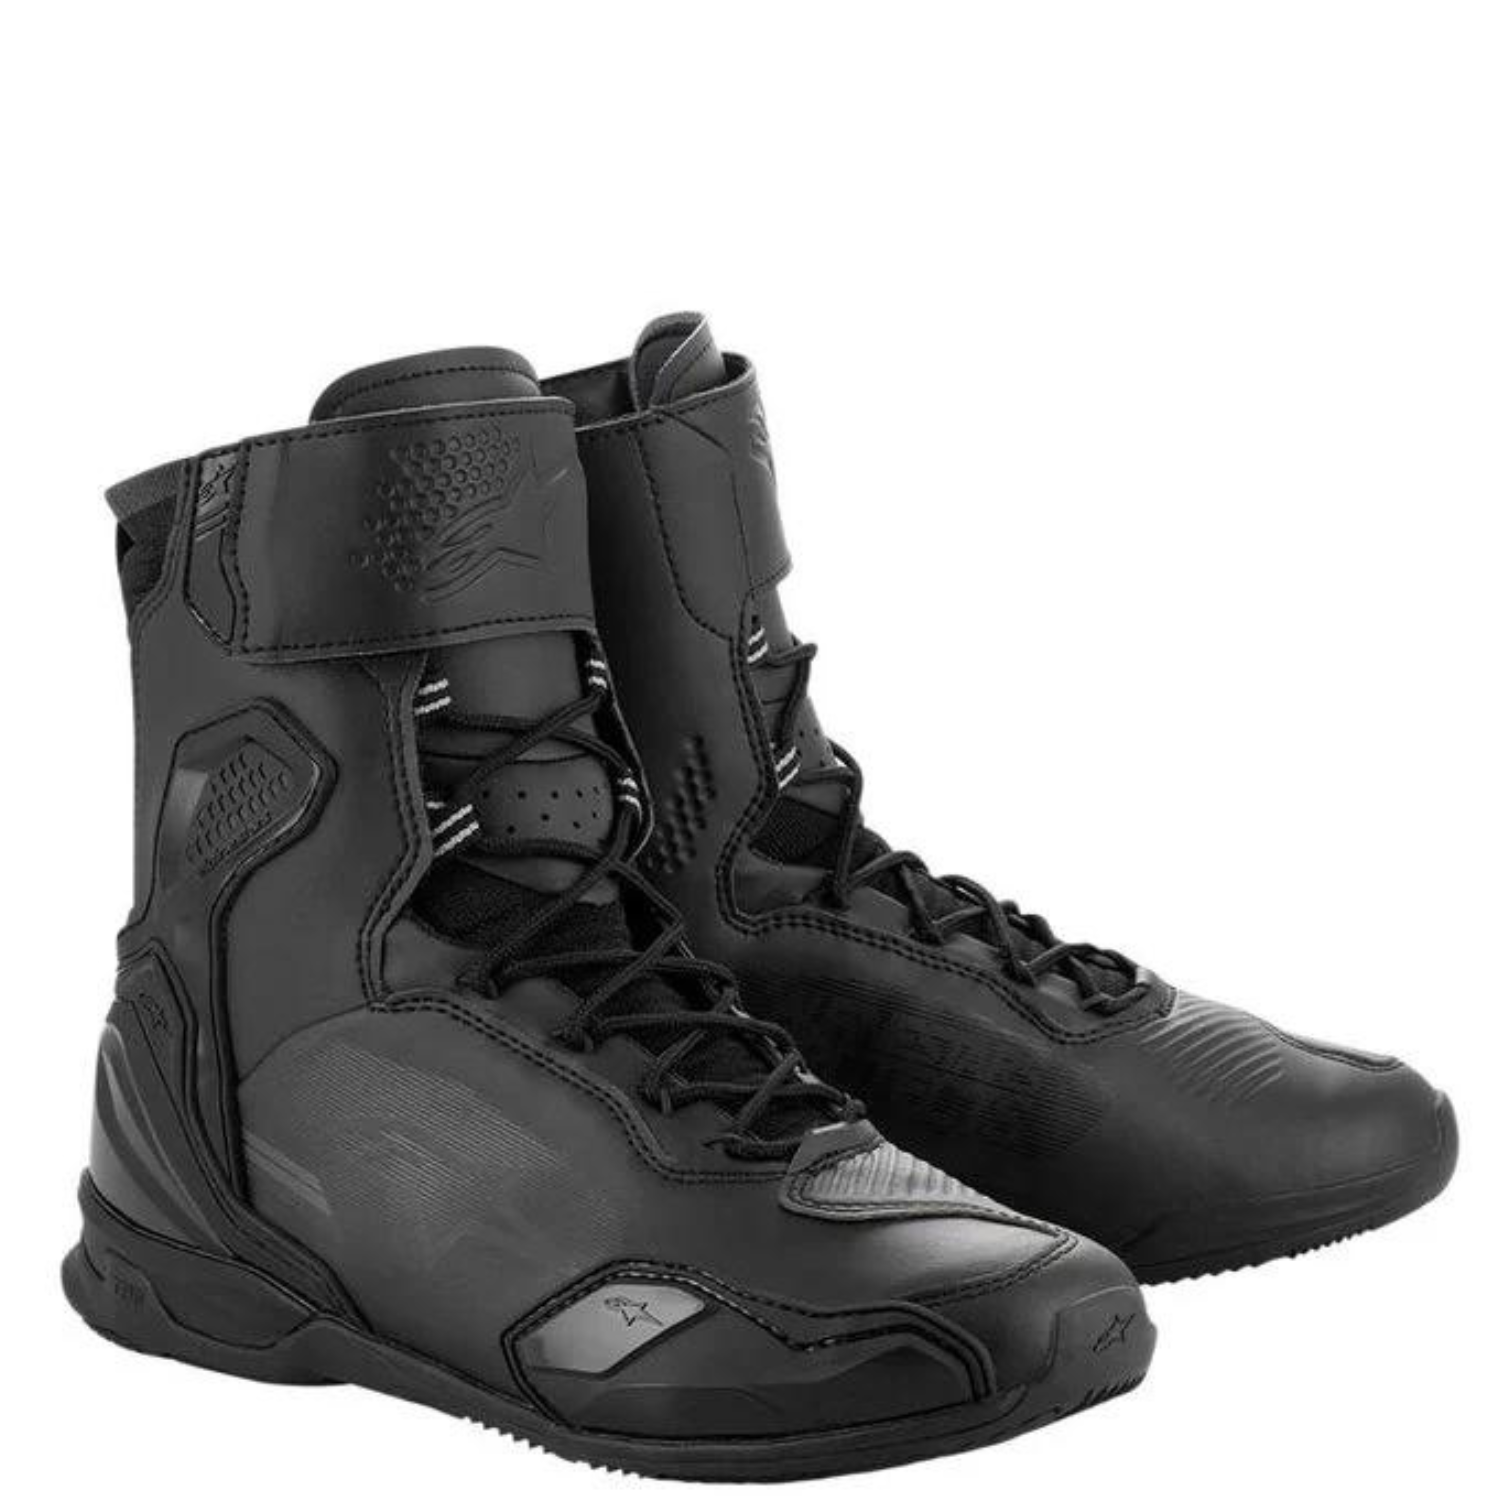 Image of Alpinestars Superfaster Shoes Black Size US 6 ID 8059347260587